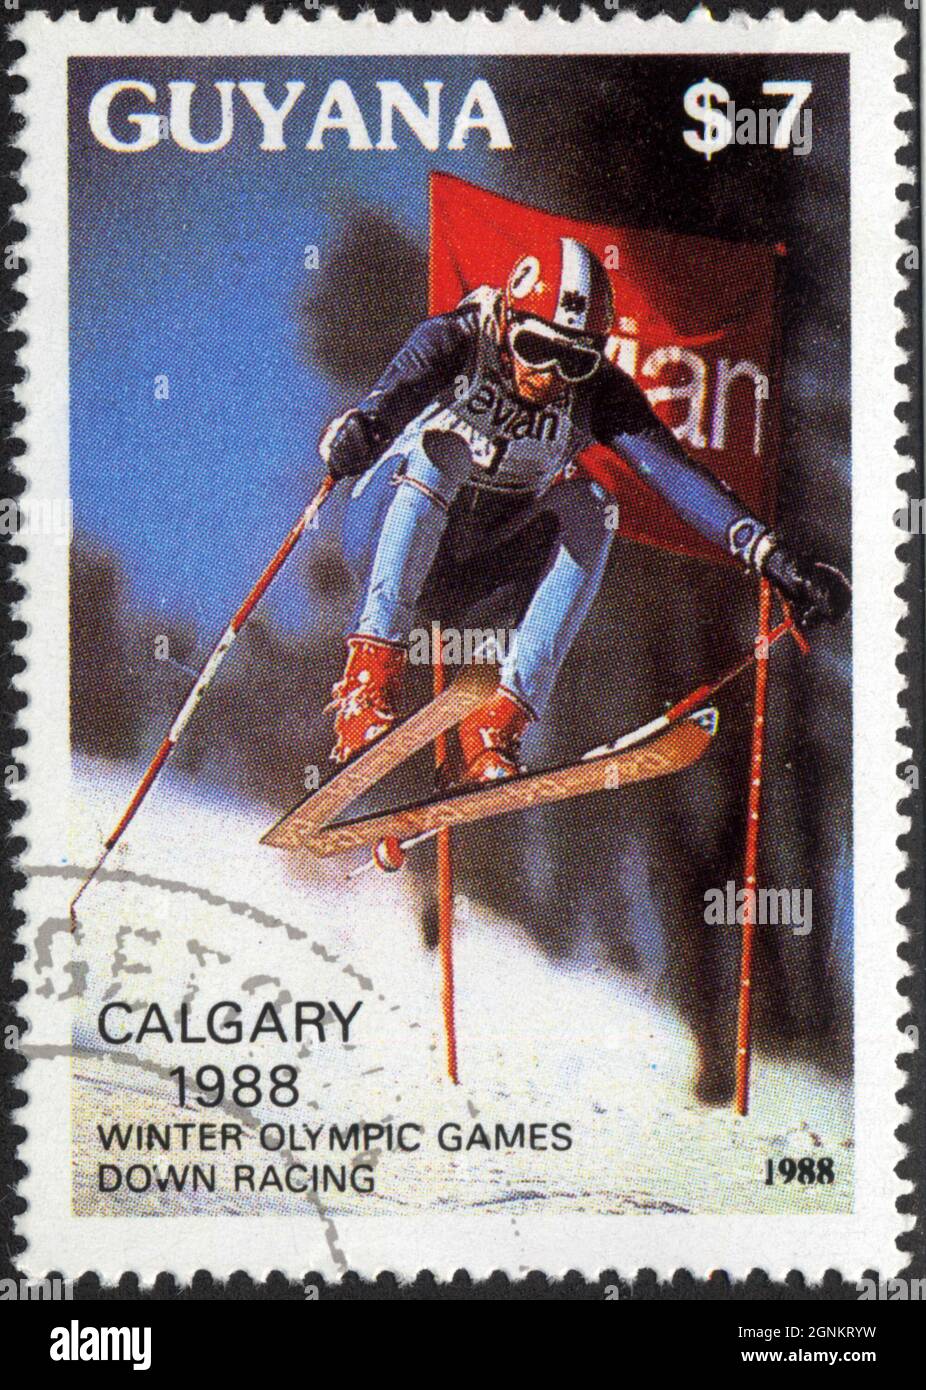 Timbre Guyana, S7, Calgary, 1988, olympische Winterspiele, Down Racing, 1988 Stockfoto